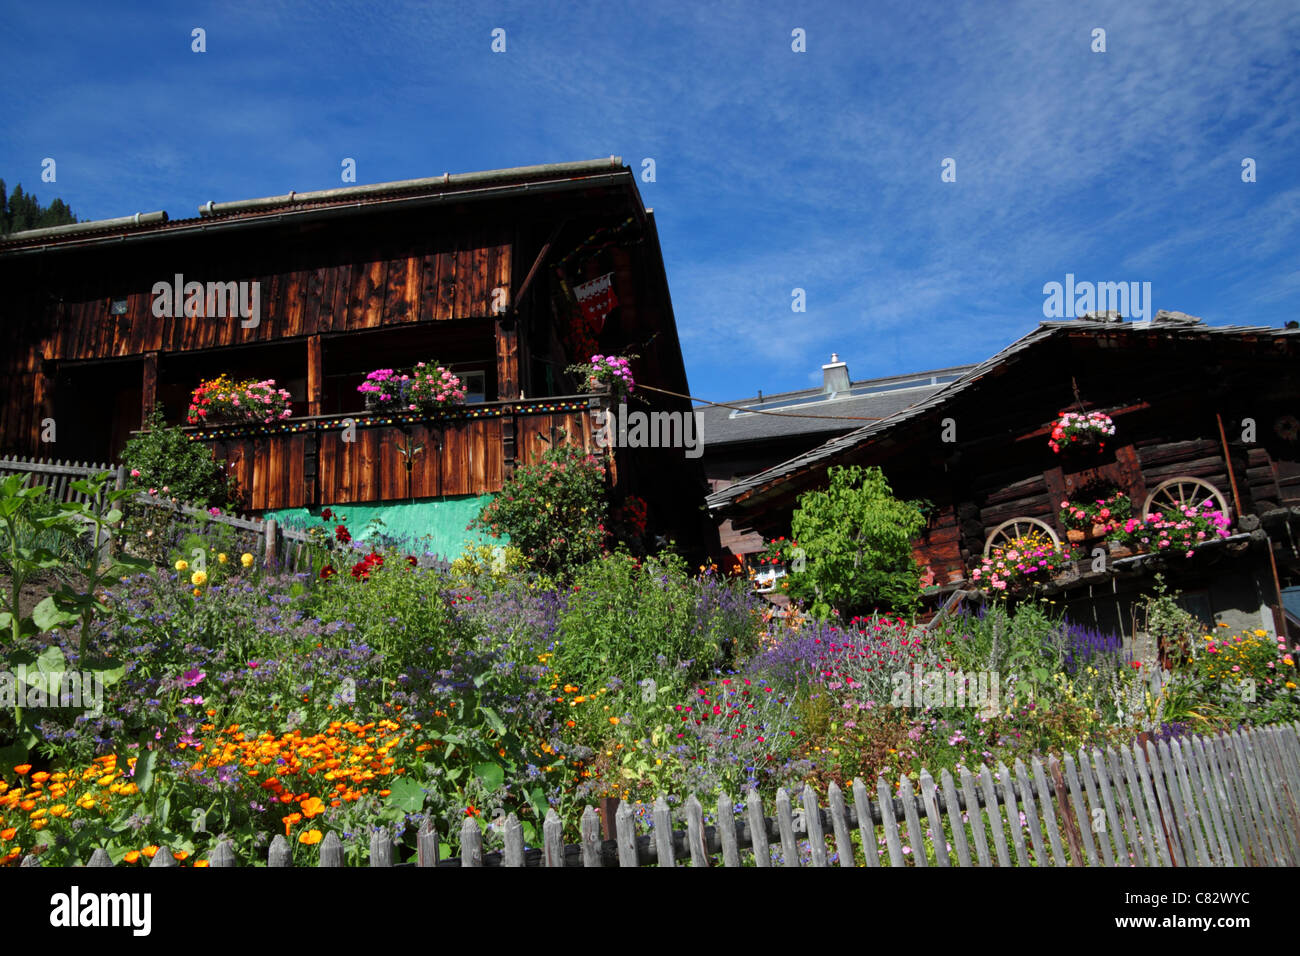 Chalet garden in Murren, Switzerland. Stock Photo